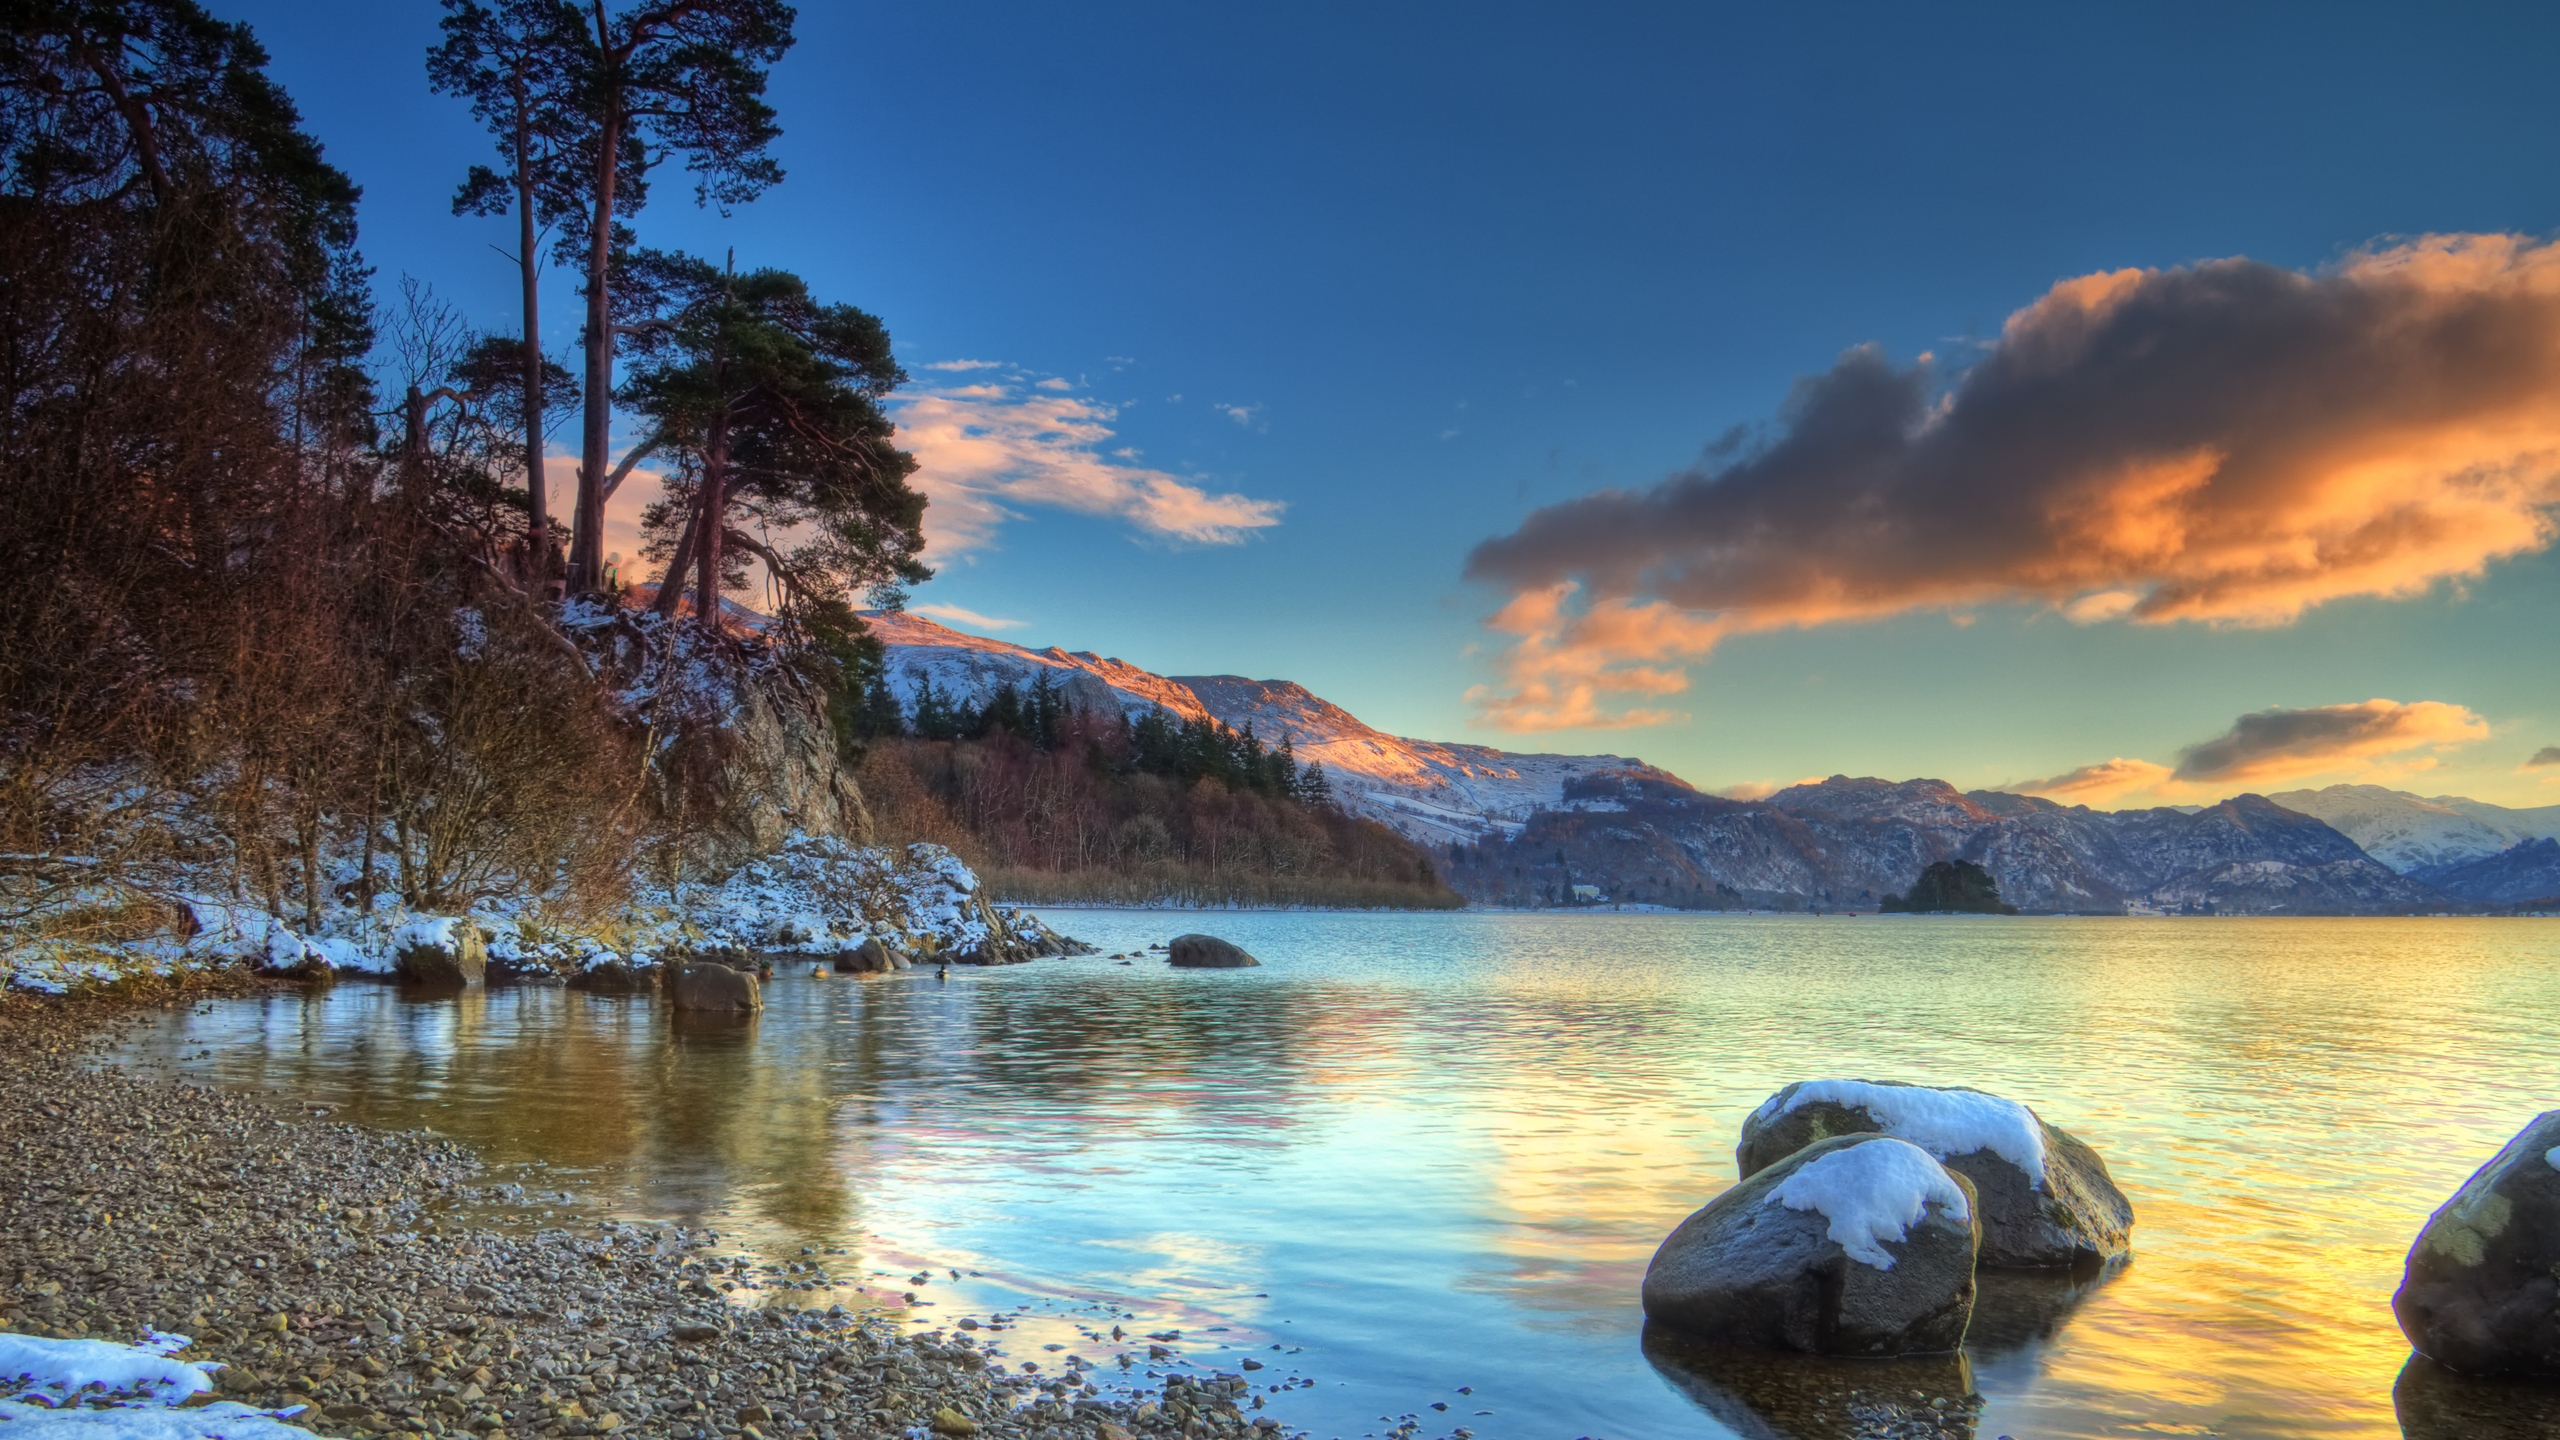 Winter Landscape for 2560x1440 HDTV resolution